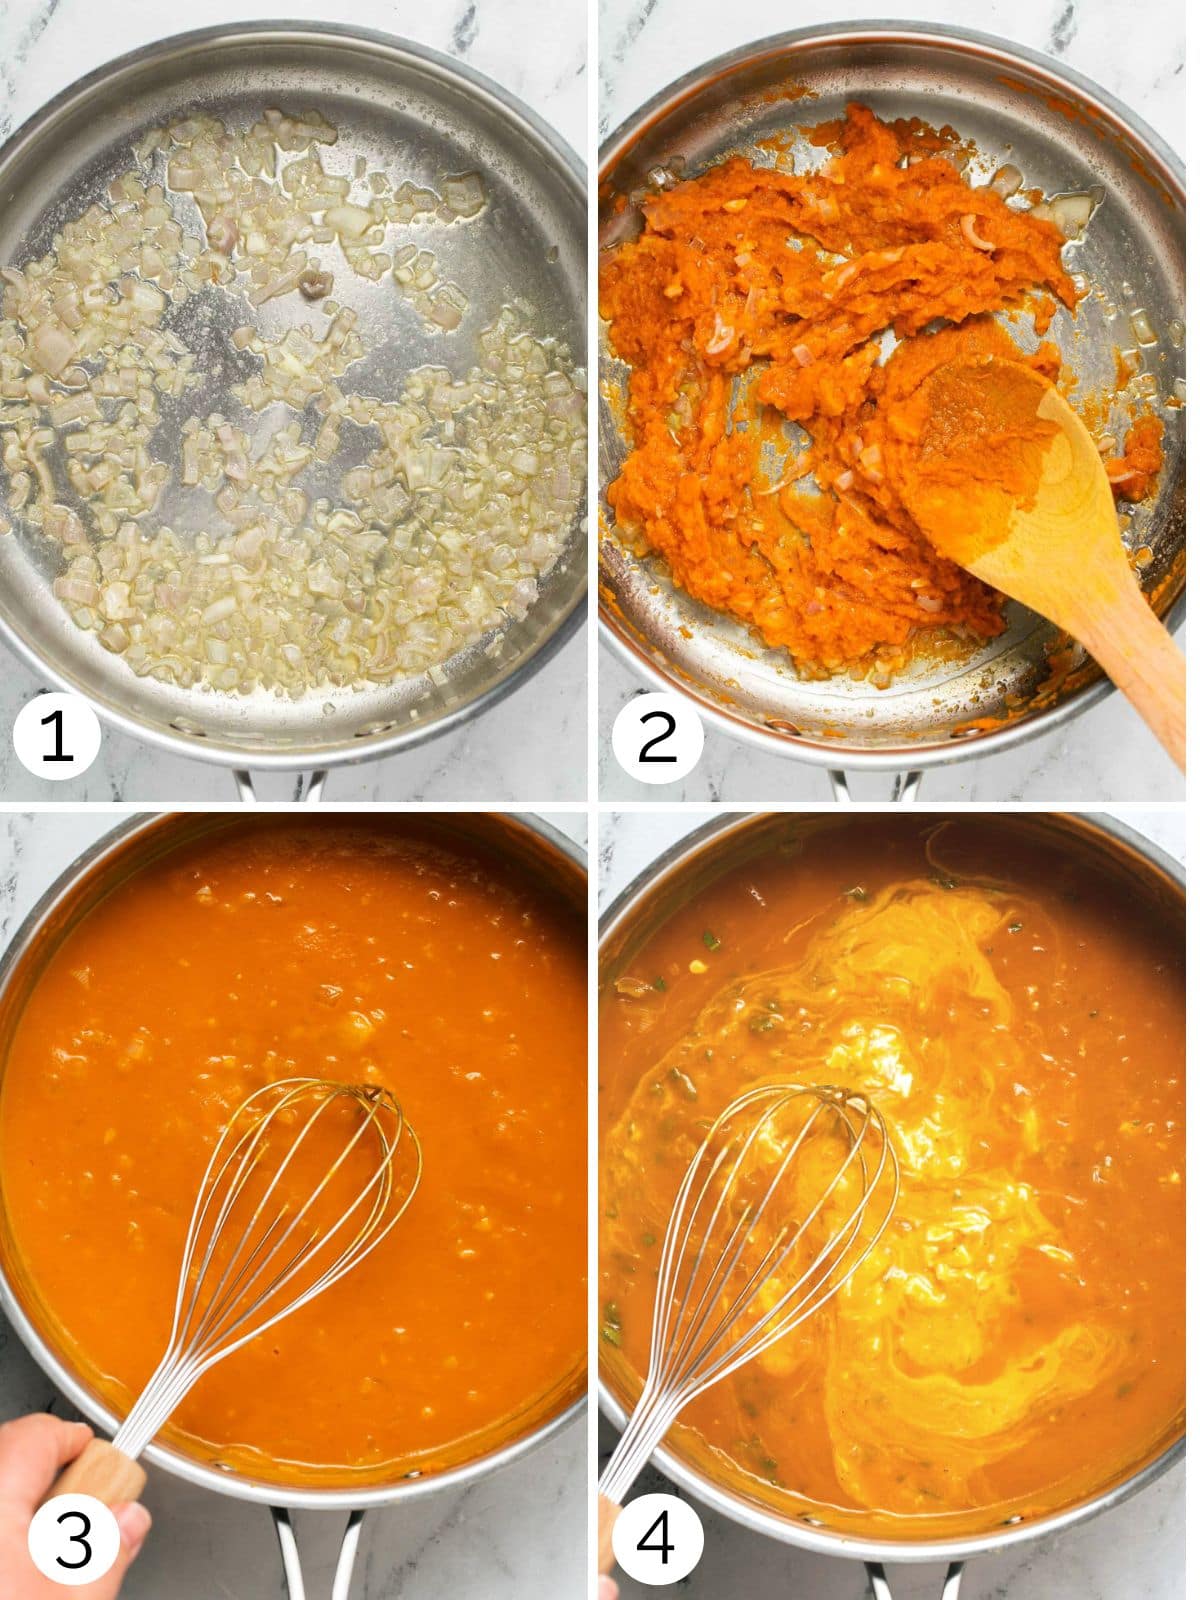 Making a pumpkin sauce in 4 steps.